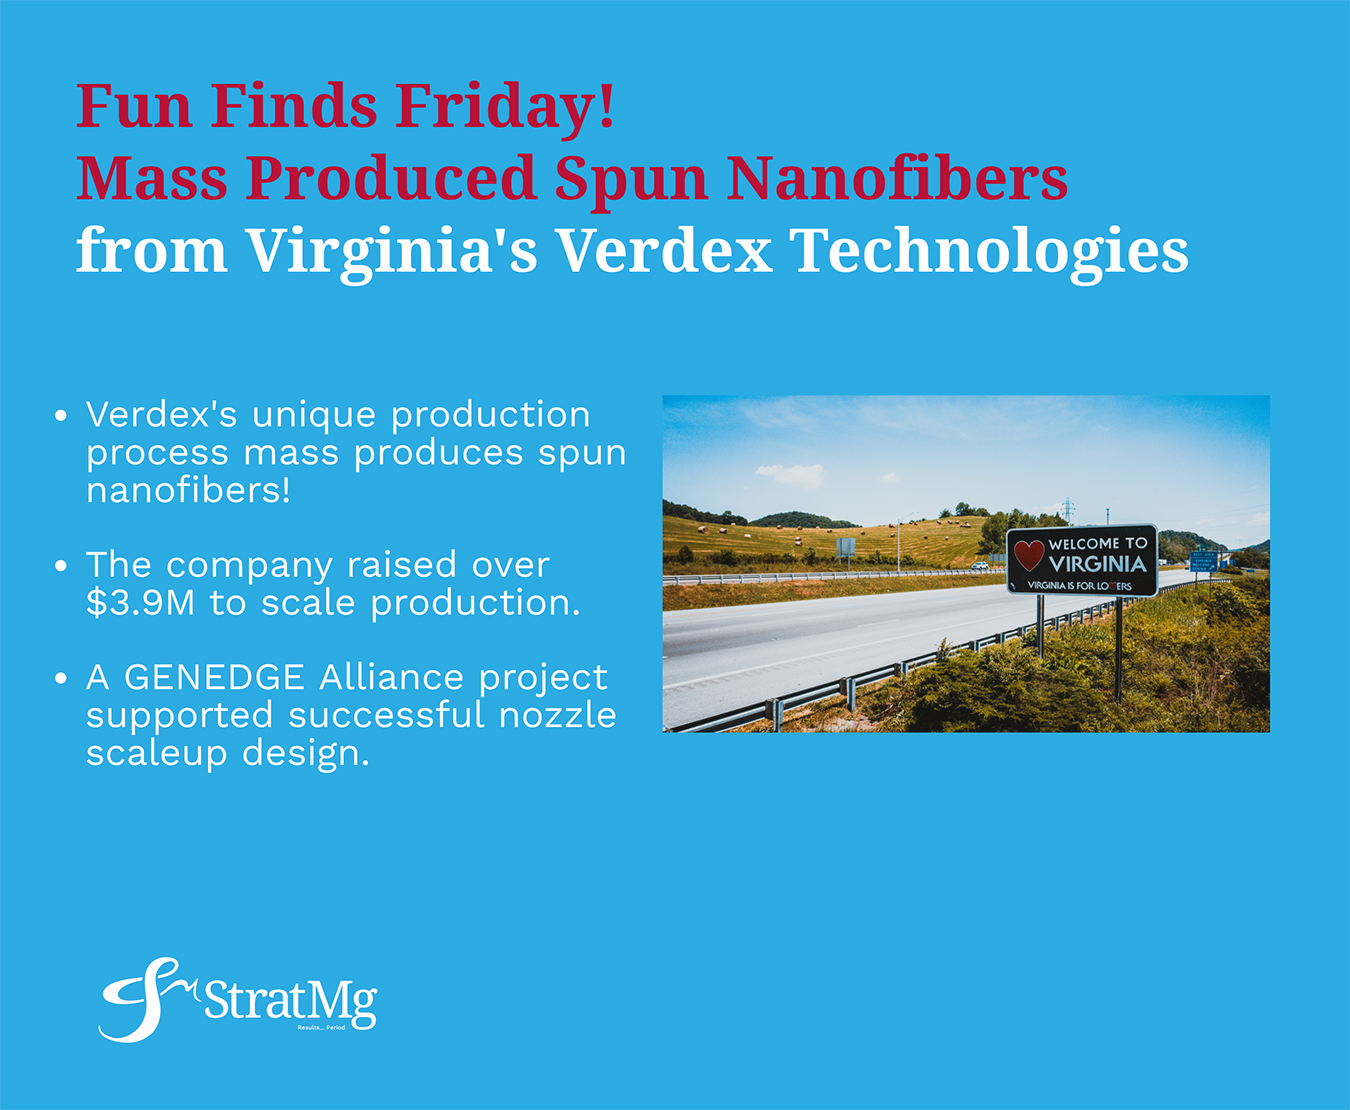 Virginia Manufacturer Verdex Technologies mass produces spun nanofibers